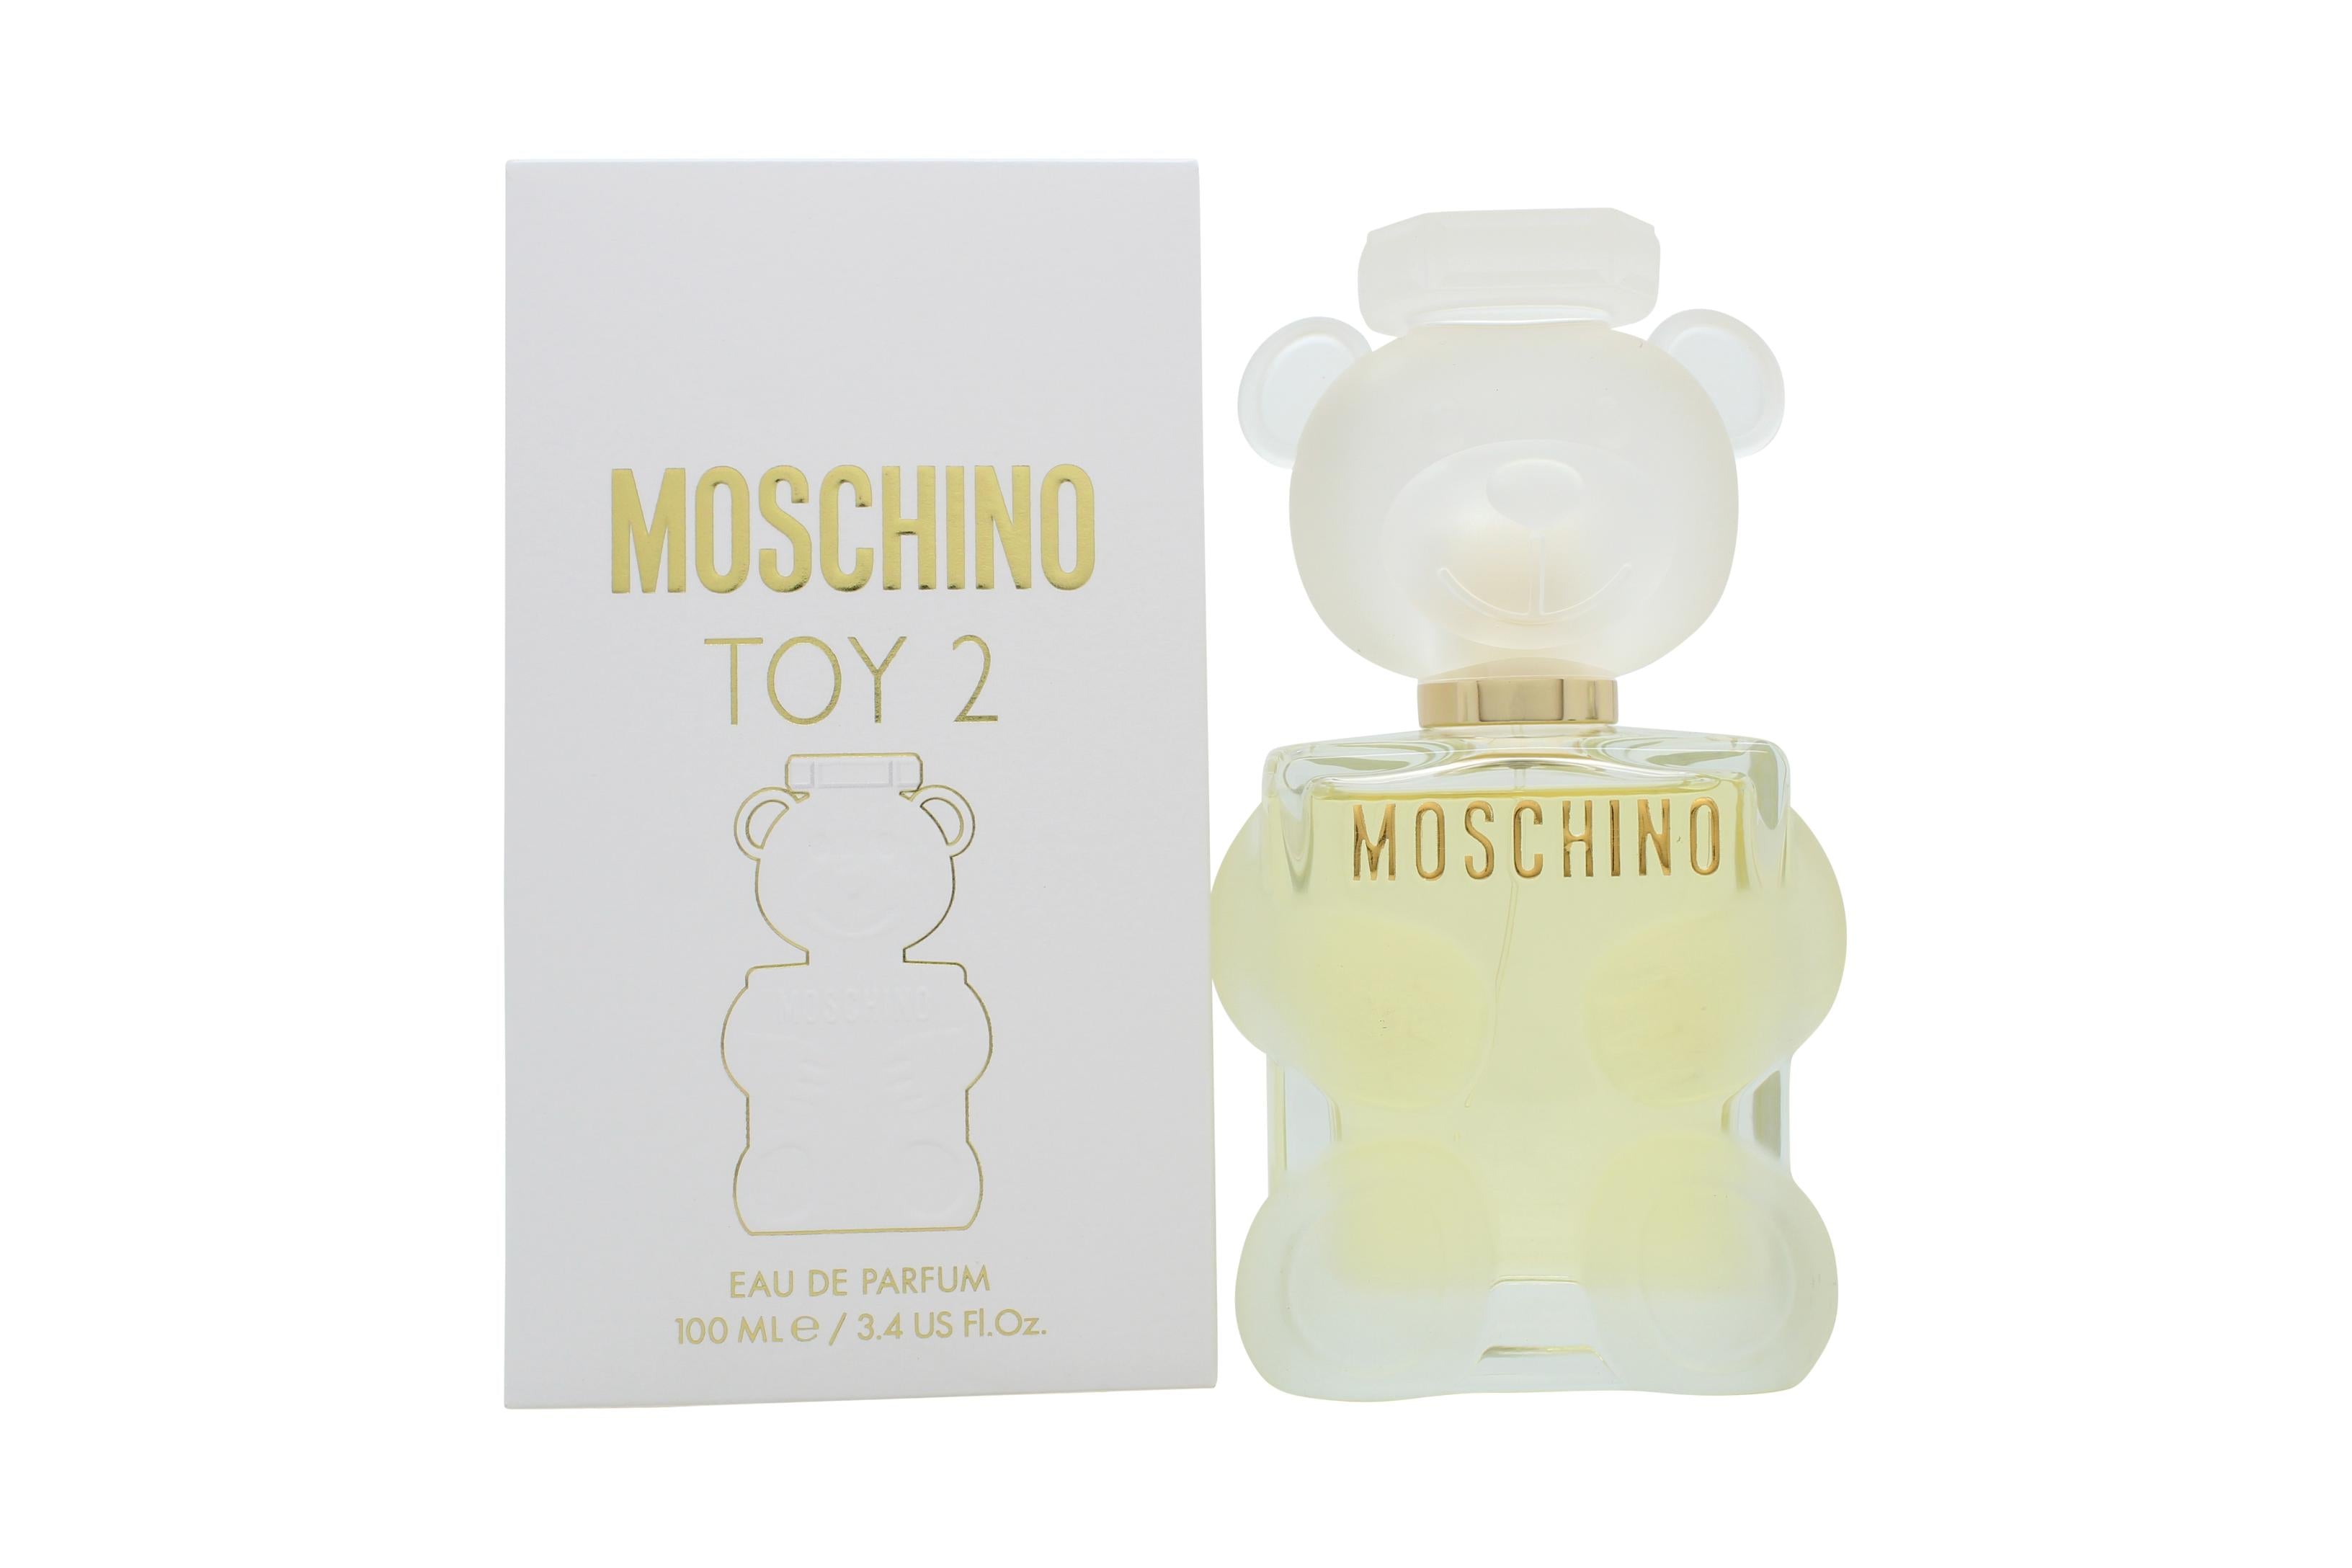 View Moschino Toy 2 Eau de Parfum 100ml Spray information